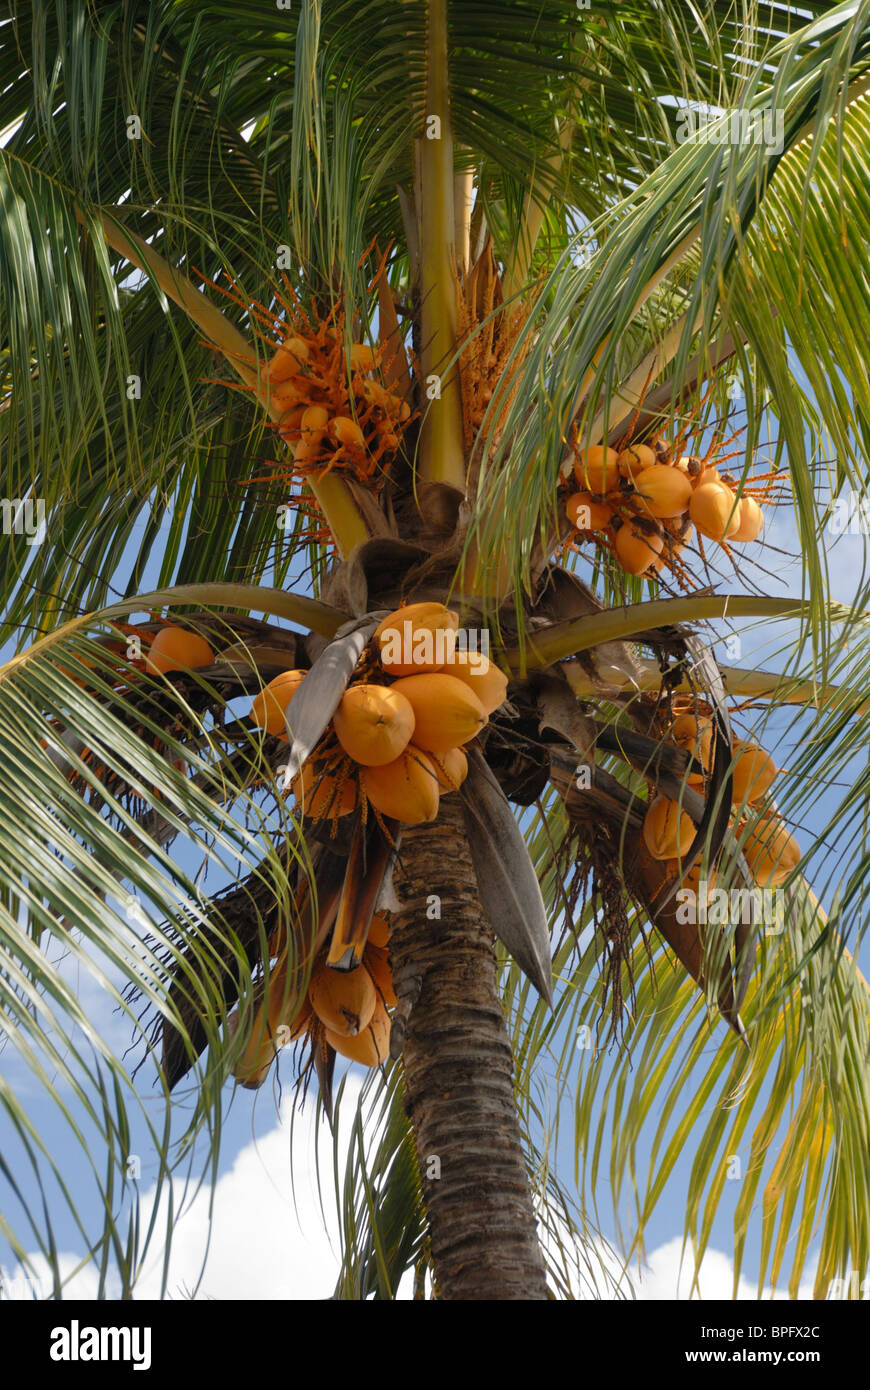 Coconut palm tree, Luquillo, Puerto Rico Stock Photo - Alamy